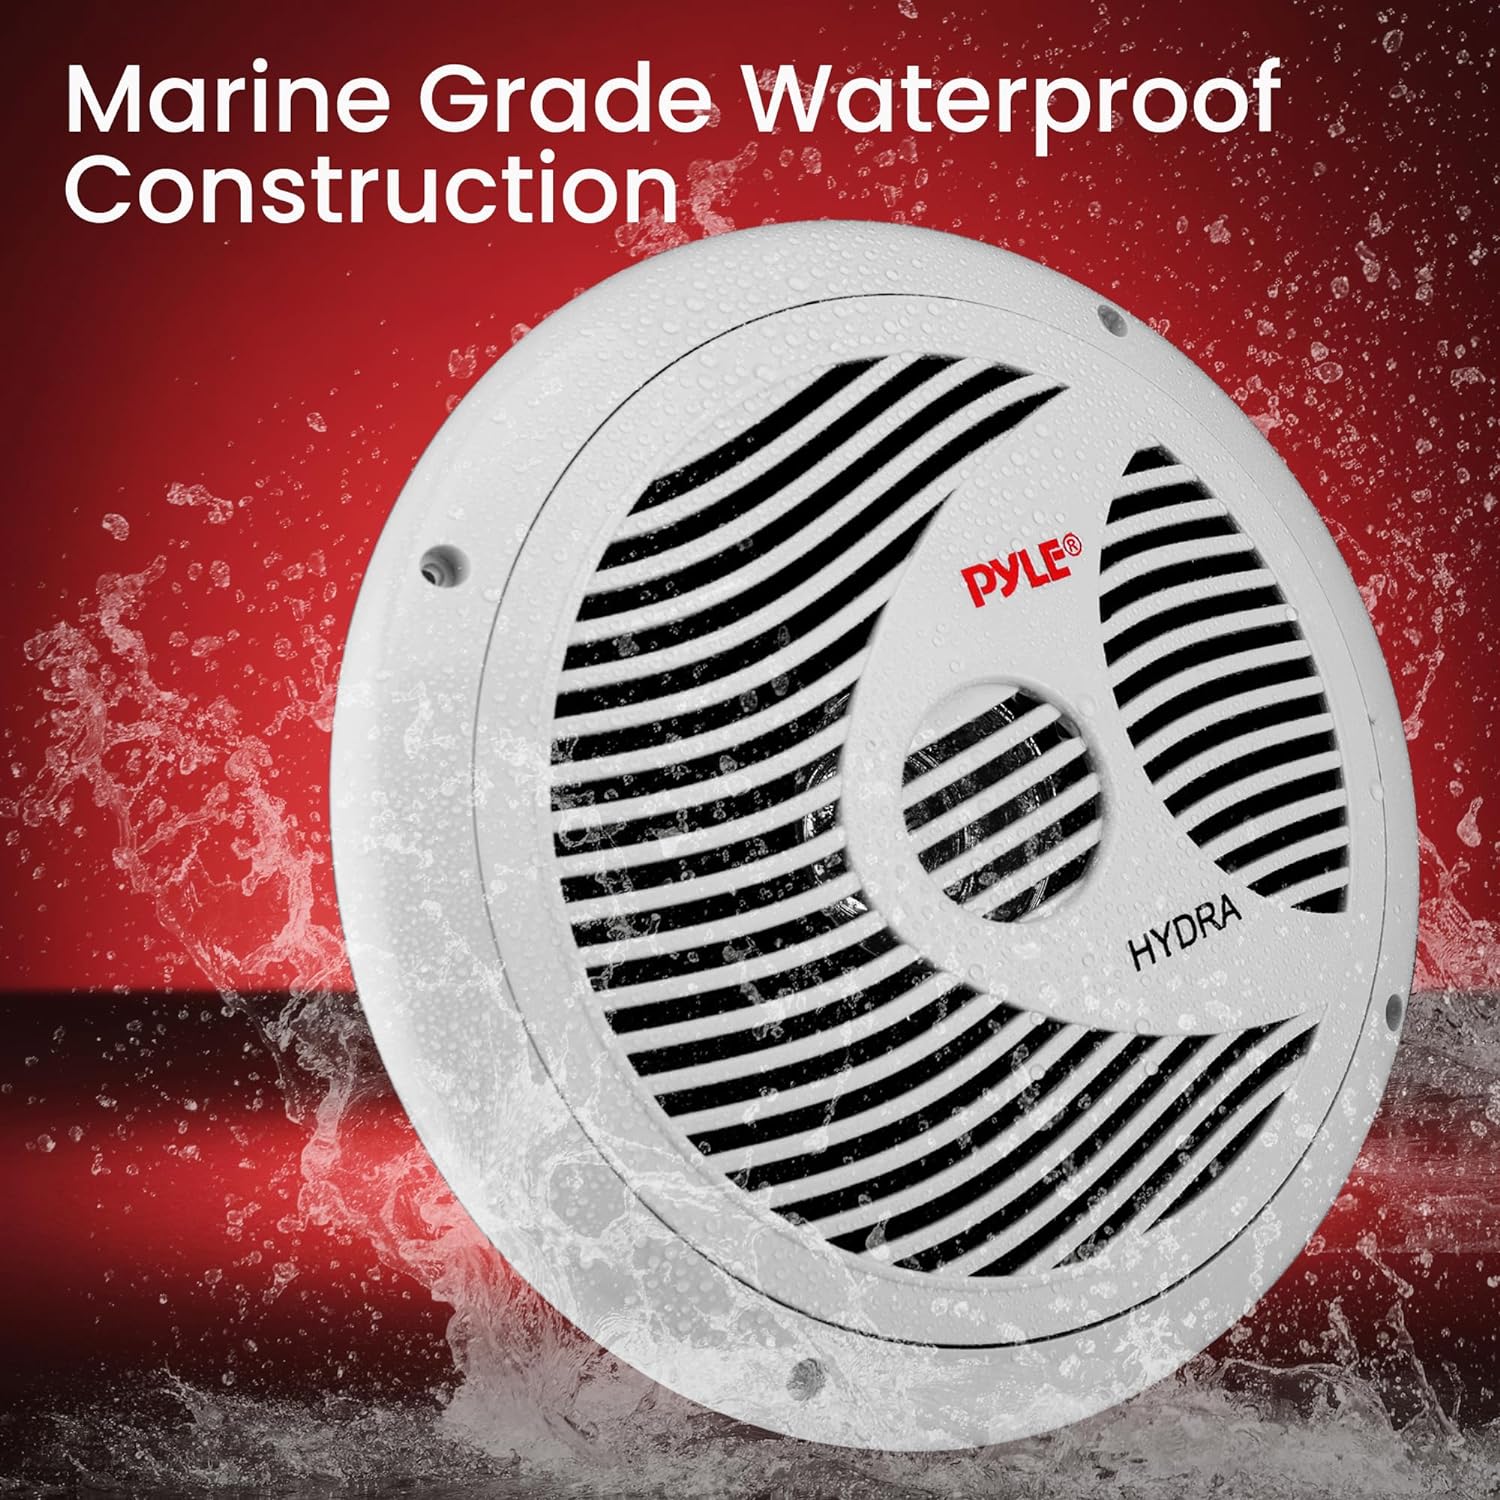 Pyle Dual 6.5'' Waterproof Marine Speakers, Full Range Stereo Sound, 150 Watt, White (Pair)